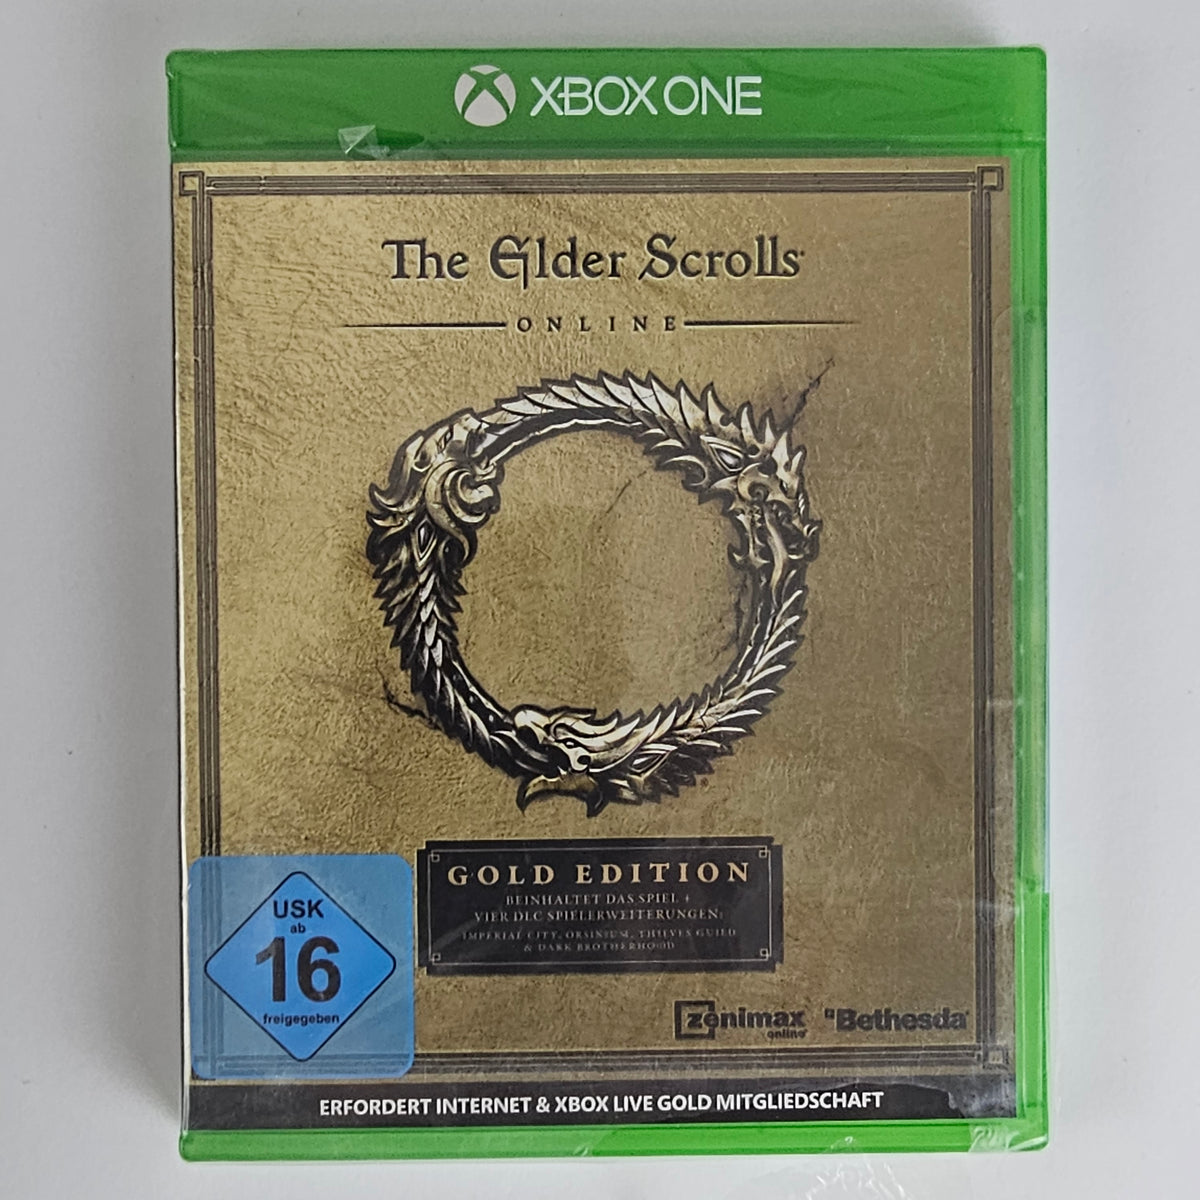 The Elder Scrolls Online: Gold [XBOXO]